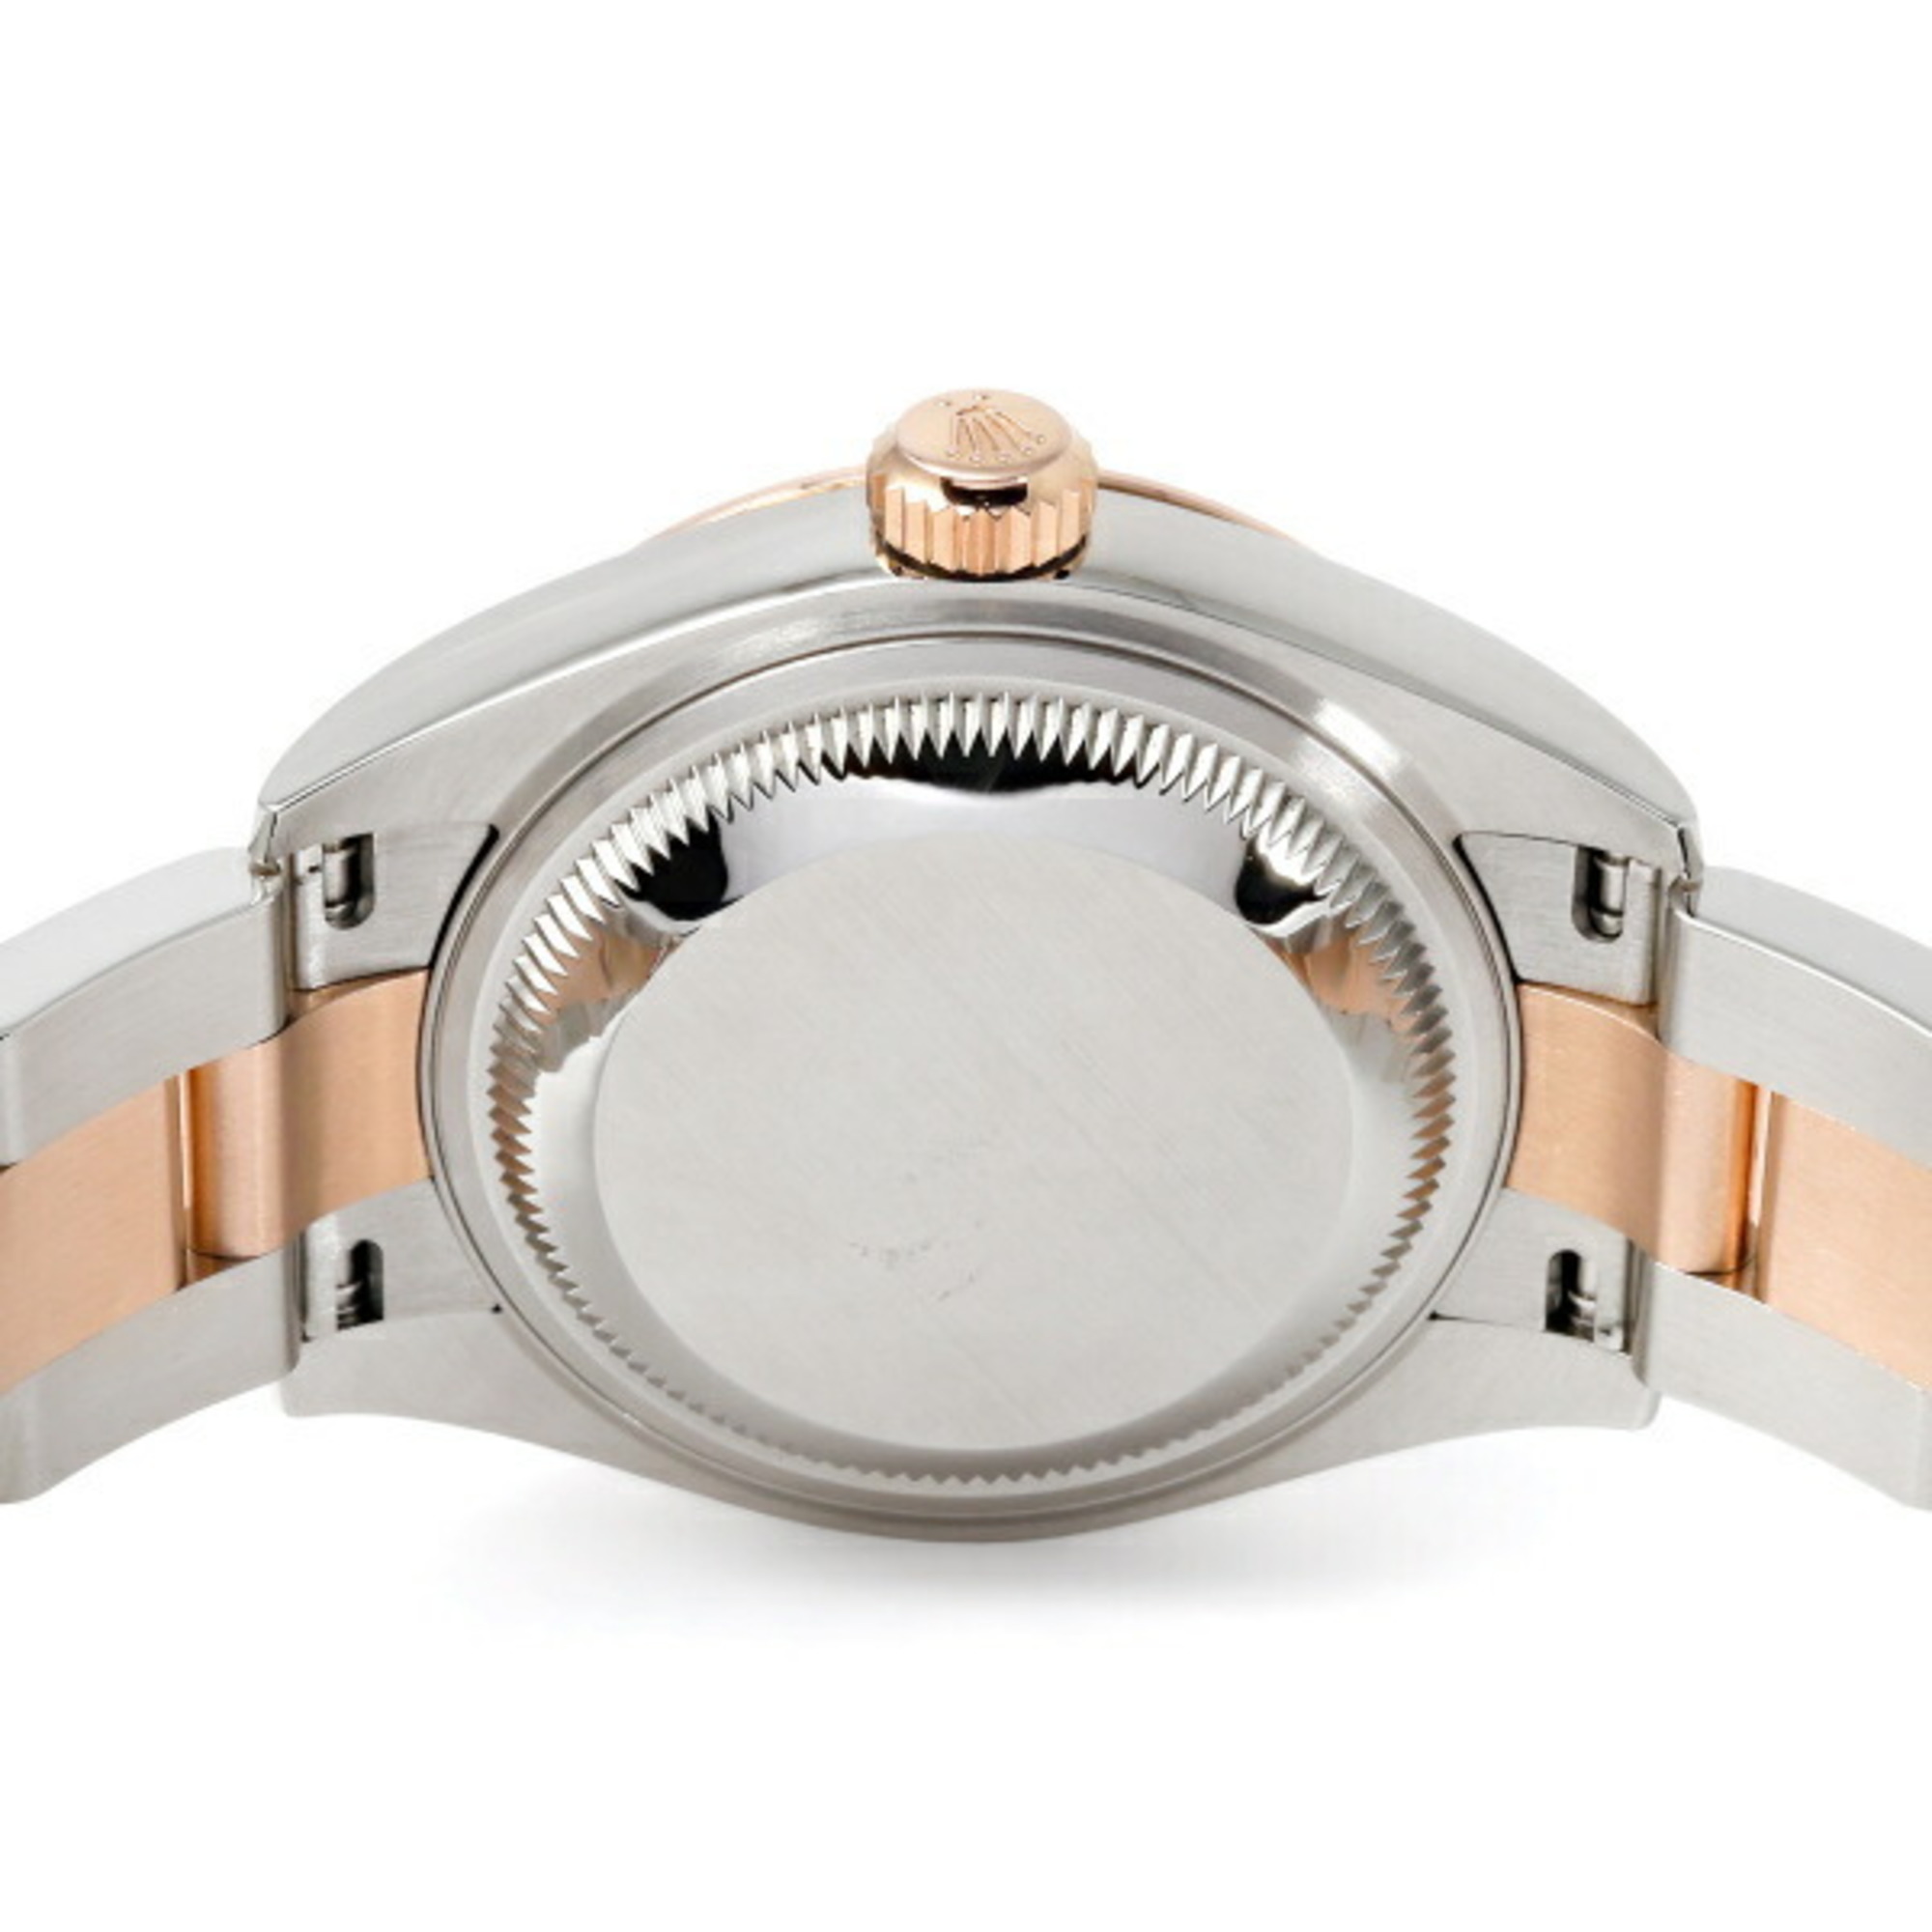 Rolex Datejust 28 Lady 279161G Chocolate Dial Watch Ladies